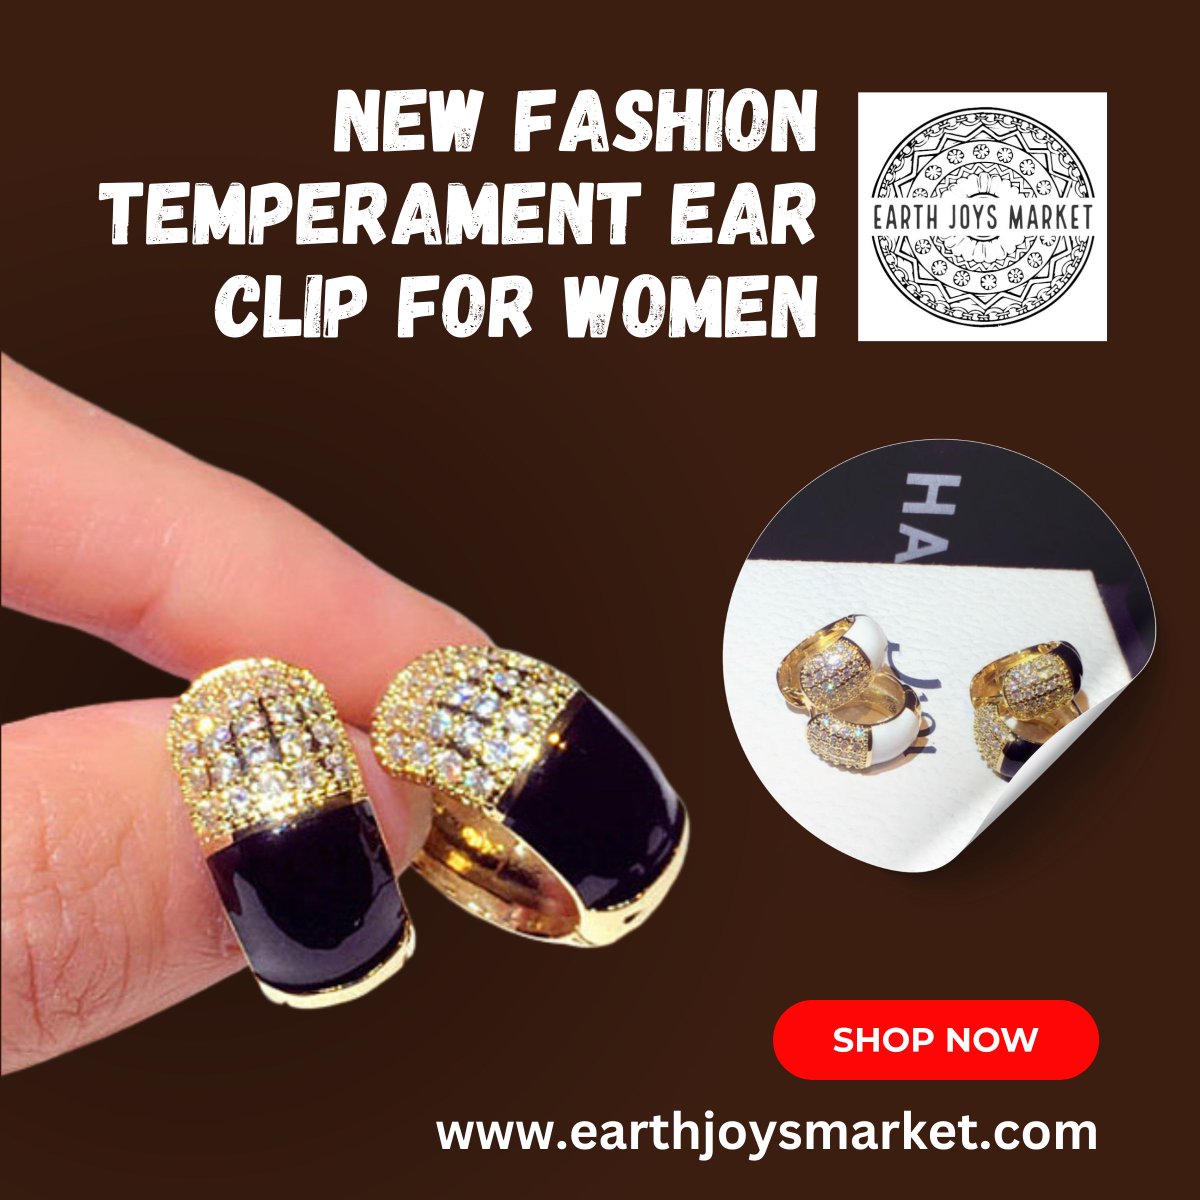 'Add a Touch of Luxury: New Fashion Temperament Ear Clip at Earth Joys Market!' Shop Now: ➡ earthjoysmarket.com/product/new-fa… #Jewelry #LuxuryJewelry #FineJewels #BestJewelryProducts #EarthJoysMarket #earring #earrings #Amazon #alibaba #aliexpressfinds